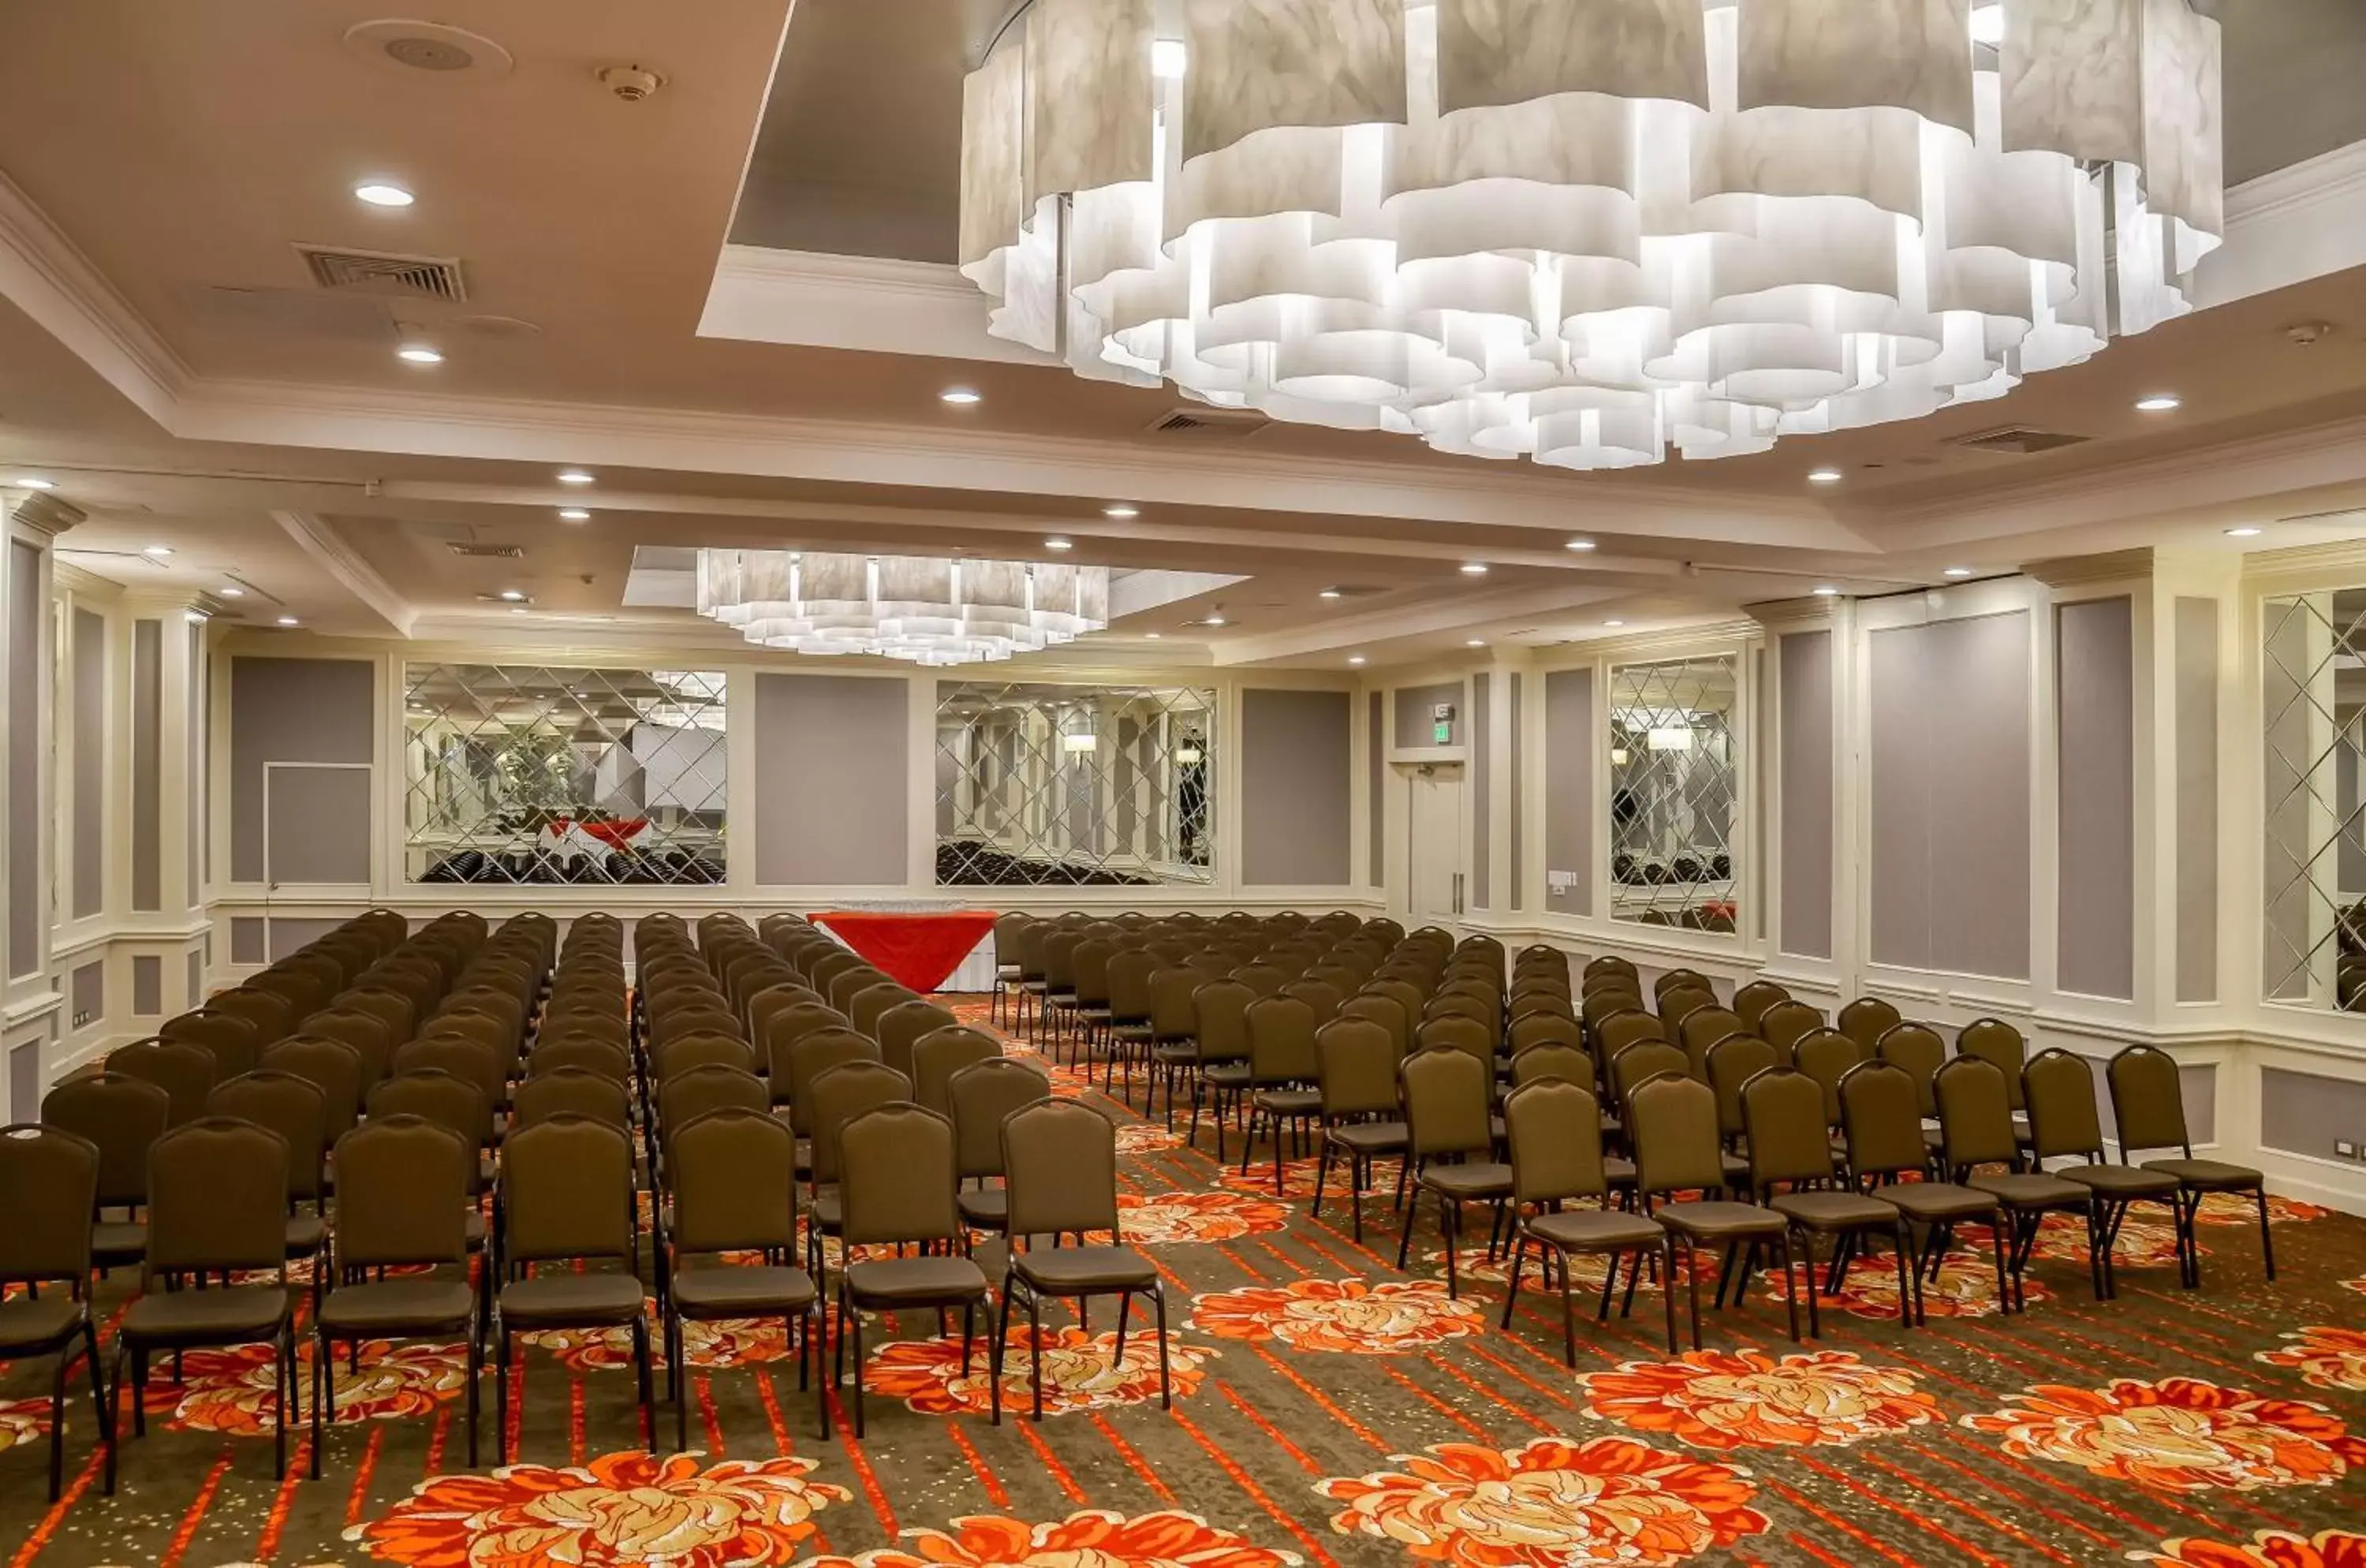 Meeting/conference room, Banquet Facilities in Hilton Garden Inn Guatemala City